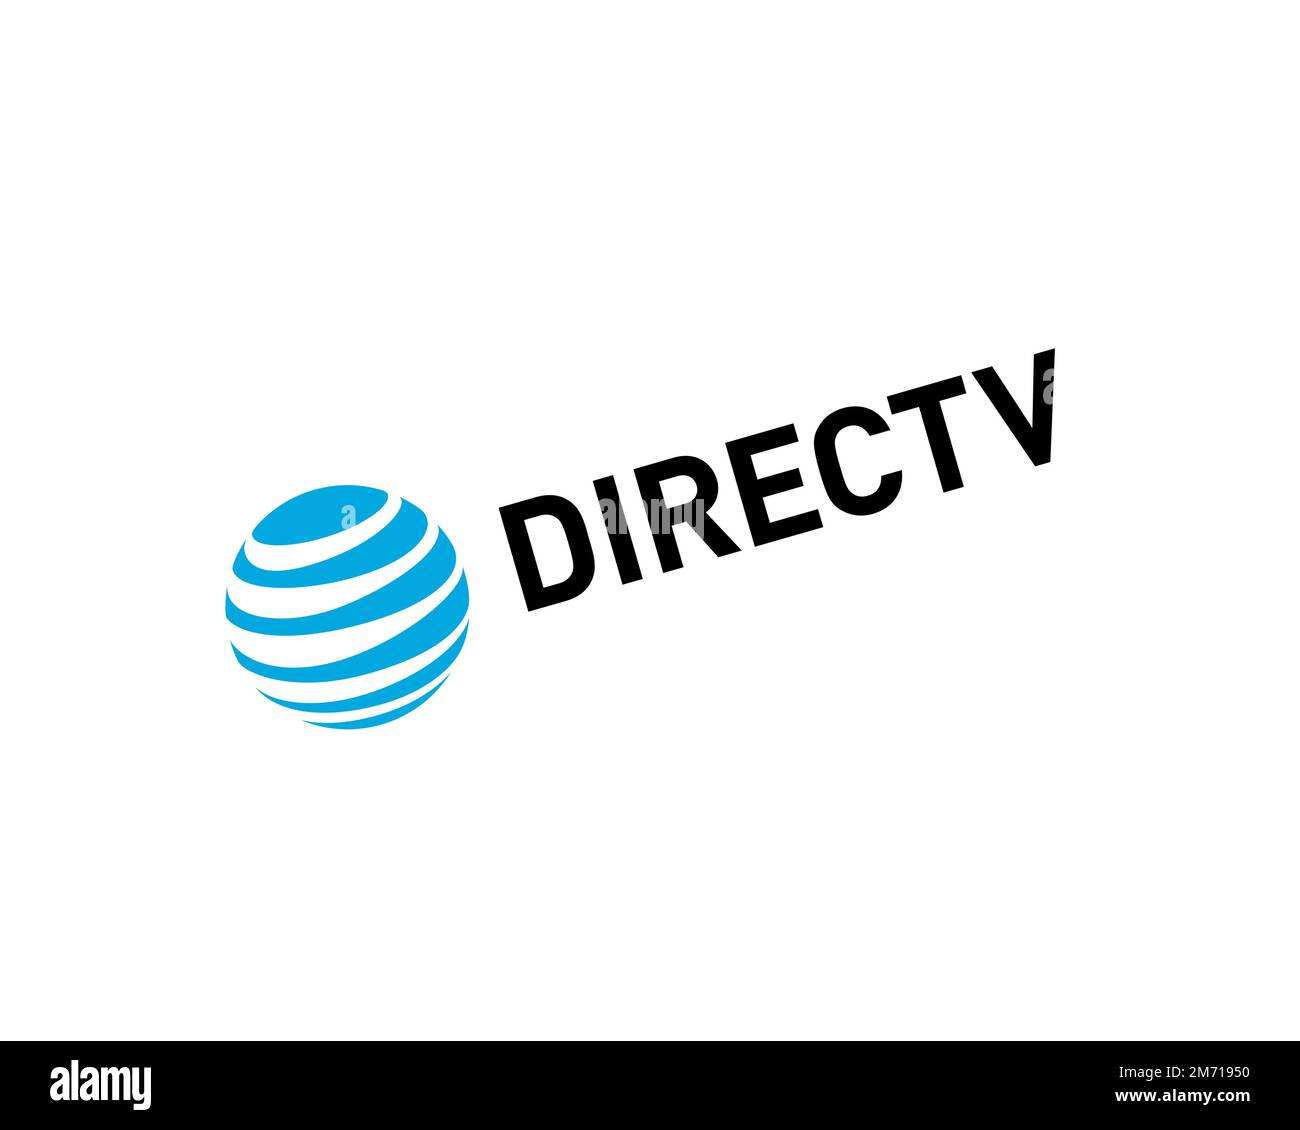 DirecTV, rotated logo, white background Stock Photo - Alamy